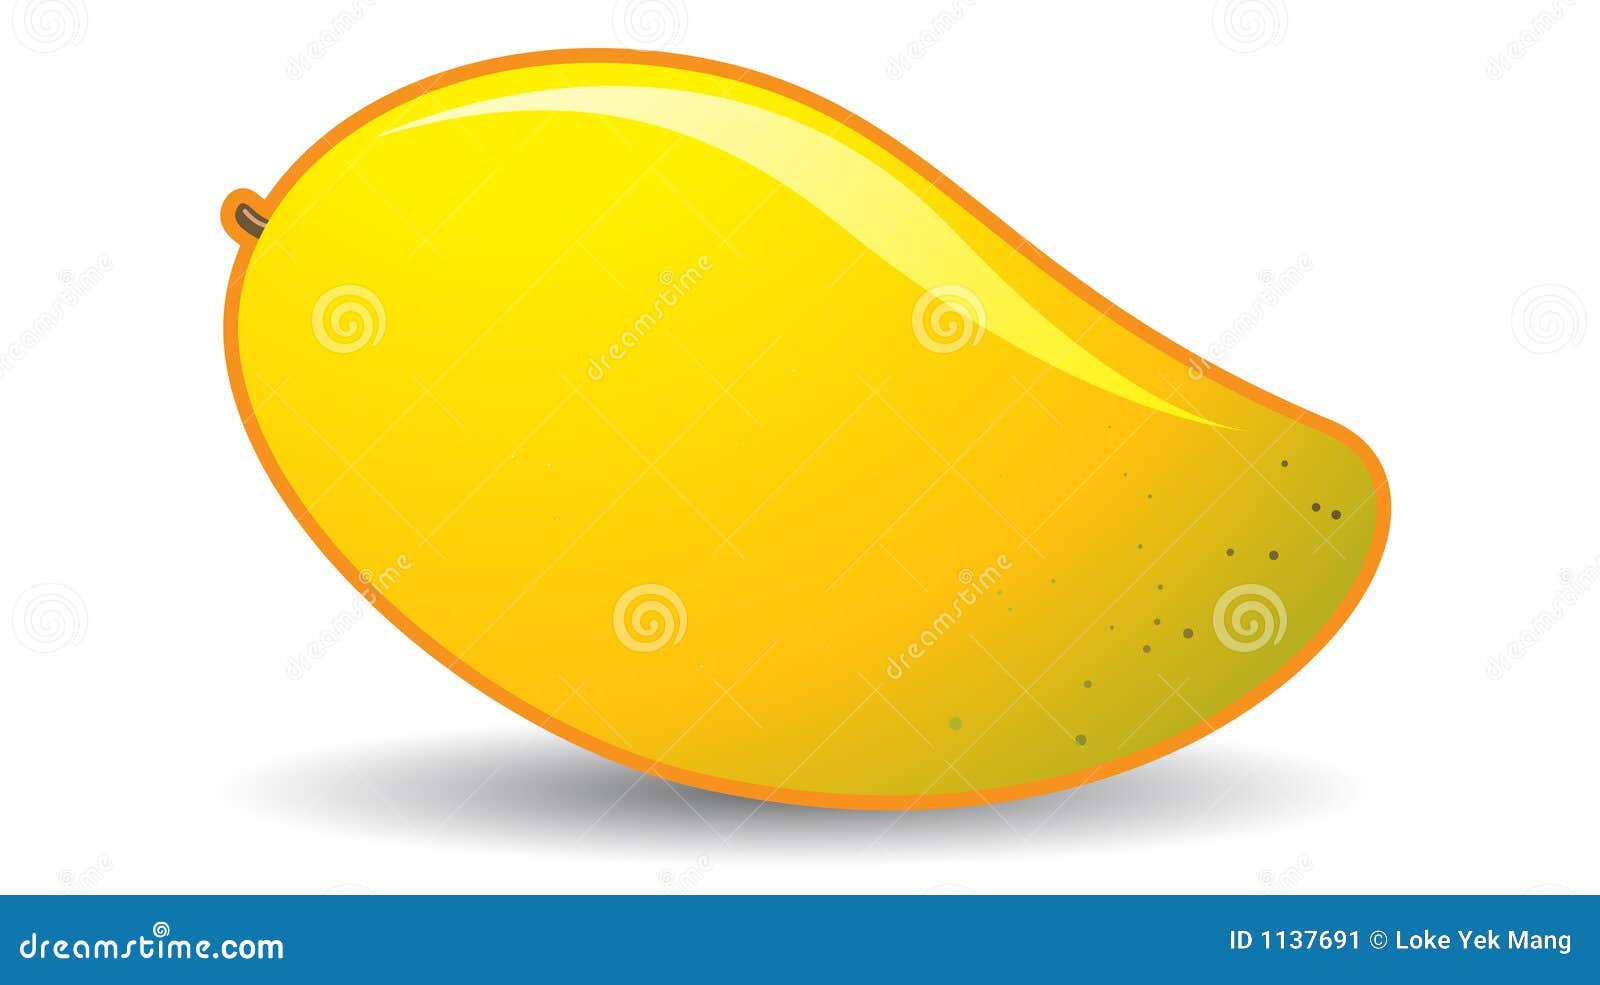 clipart of mango - photo #25